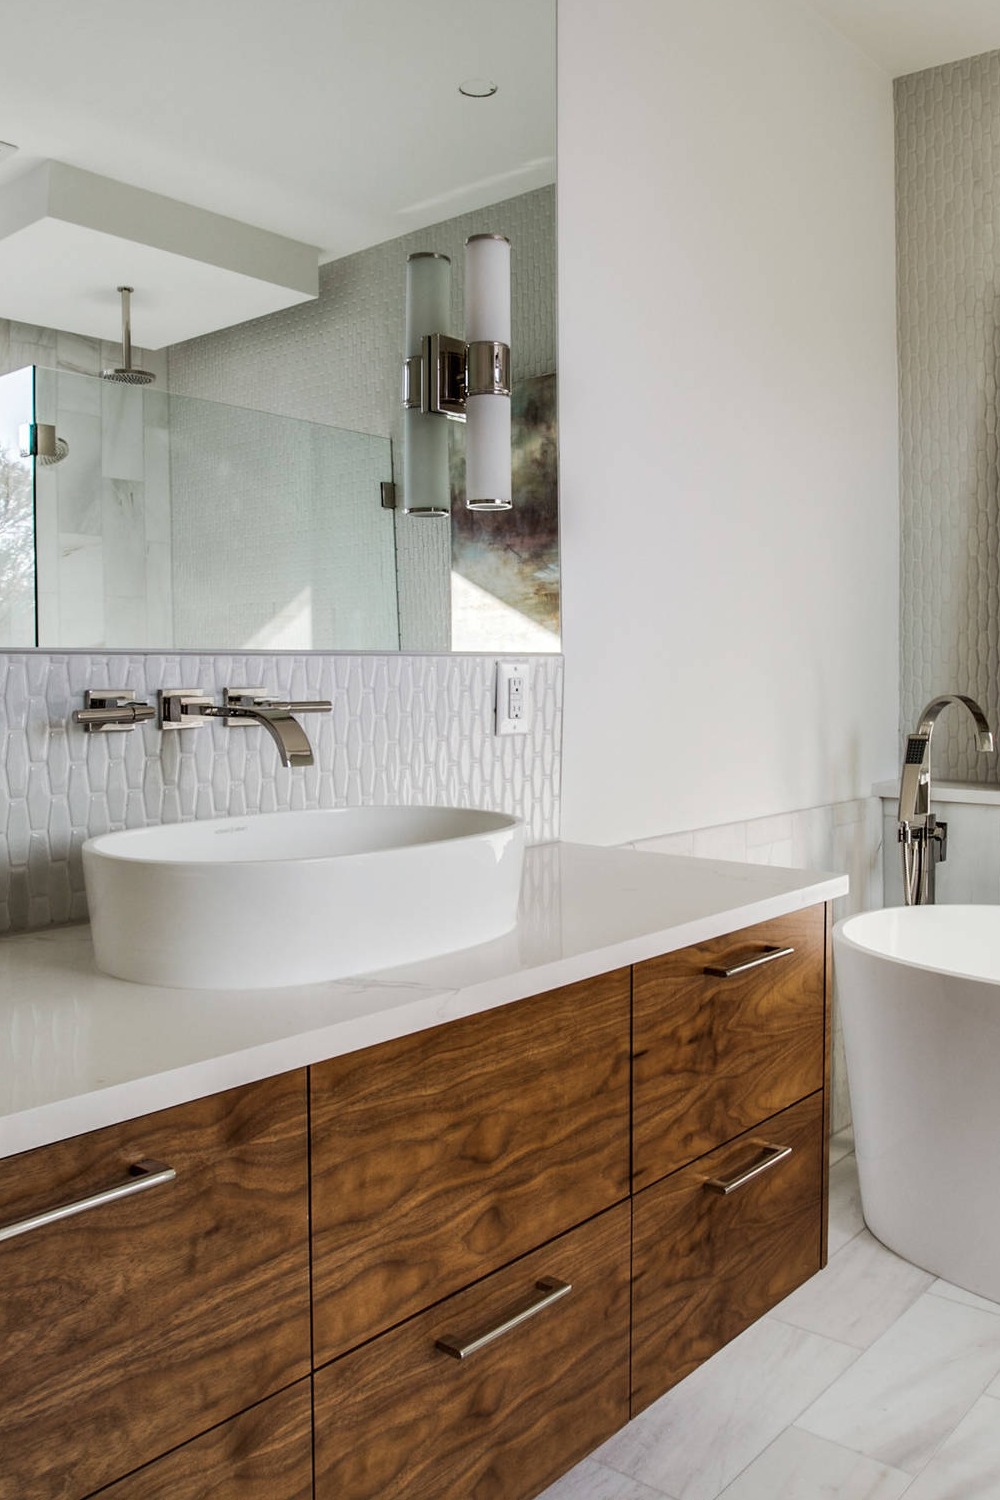 Sink Tiles Bathroom Backsplash Modern Marble Pattern Painted Shower Shades Grout Ceramic Ceiling Dark Cabinetry Vessel Sink